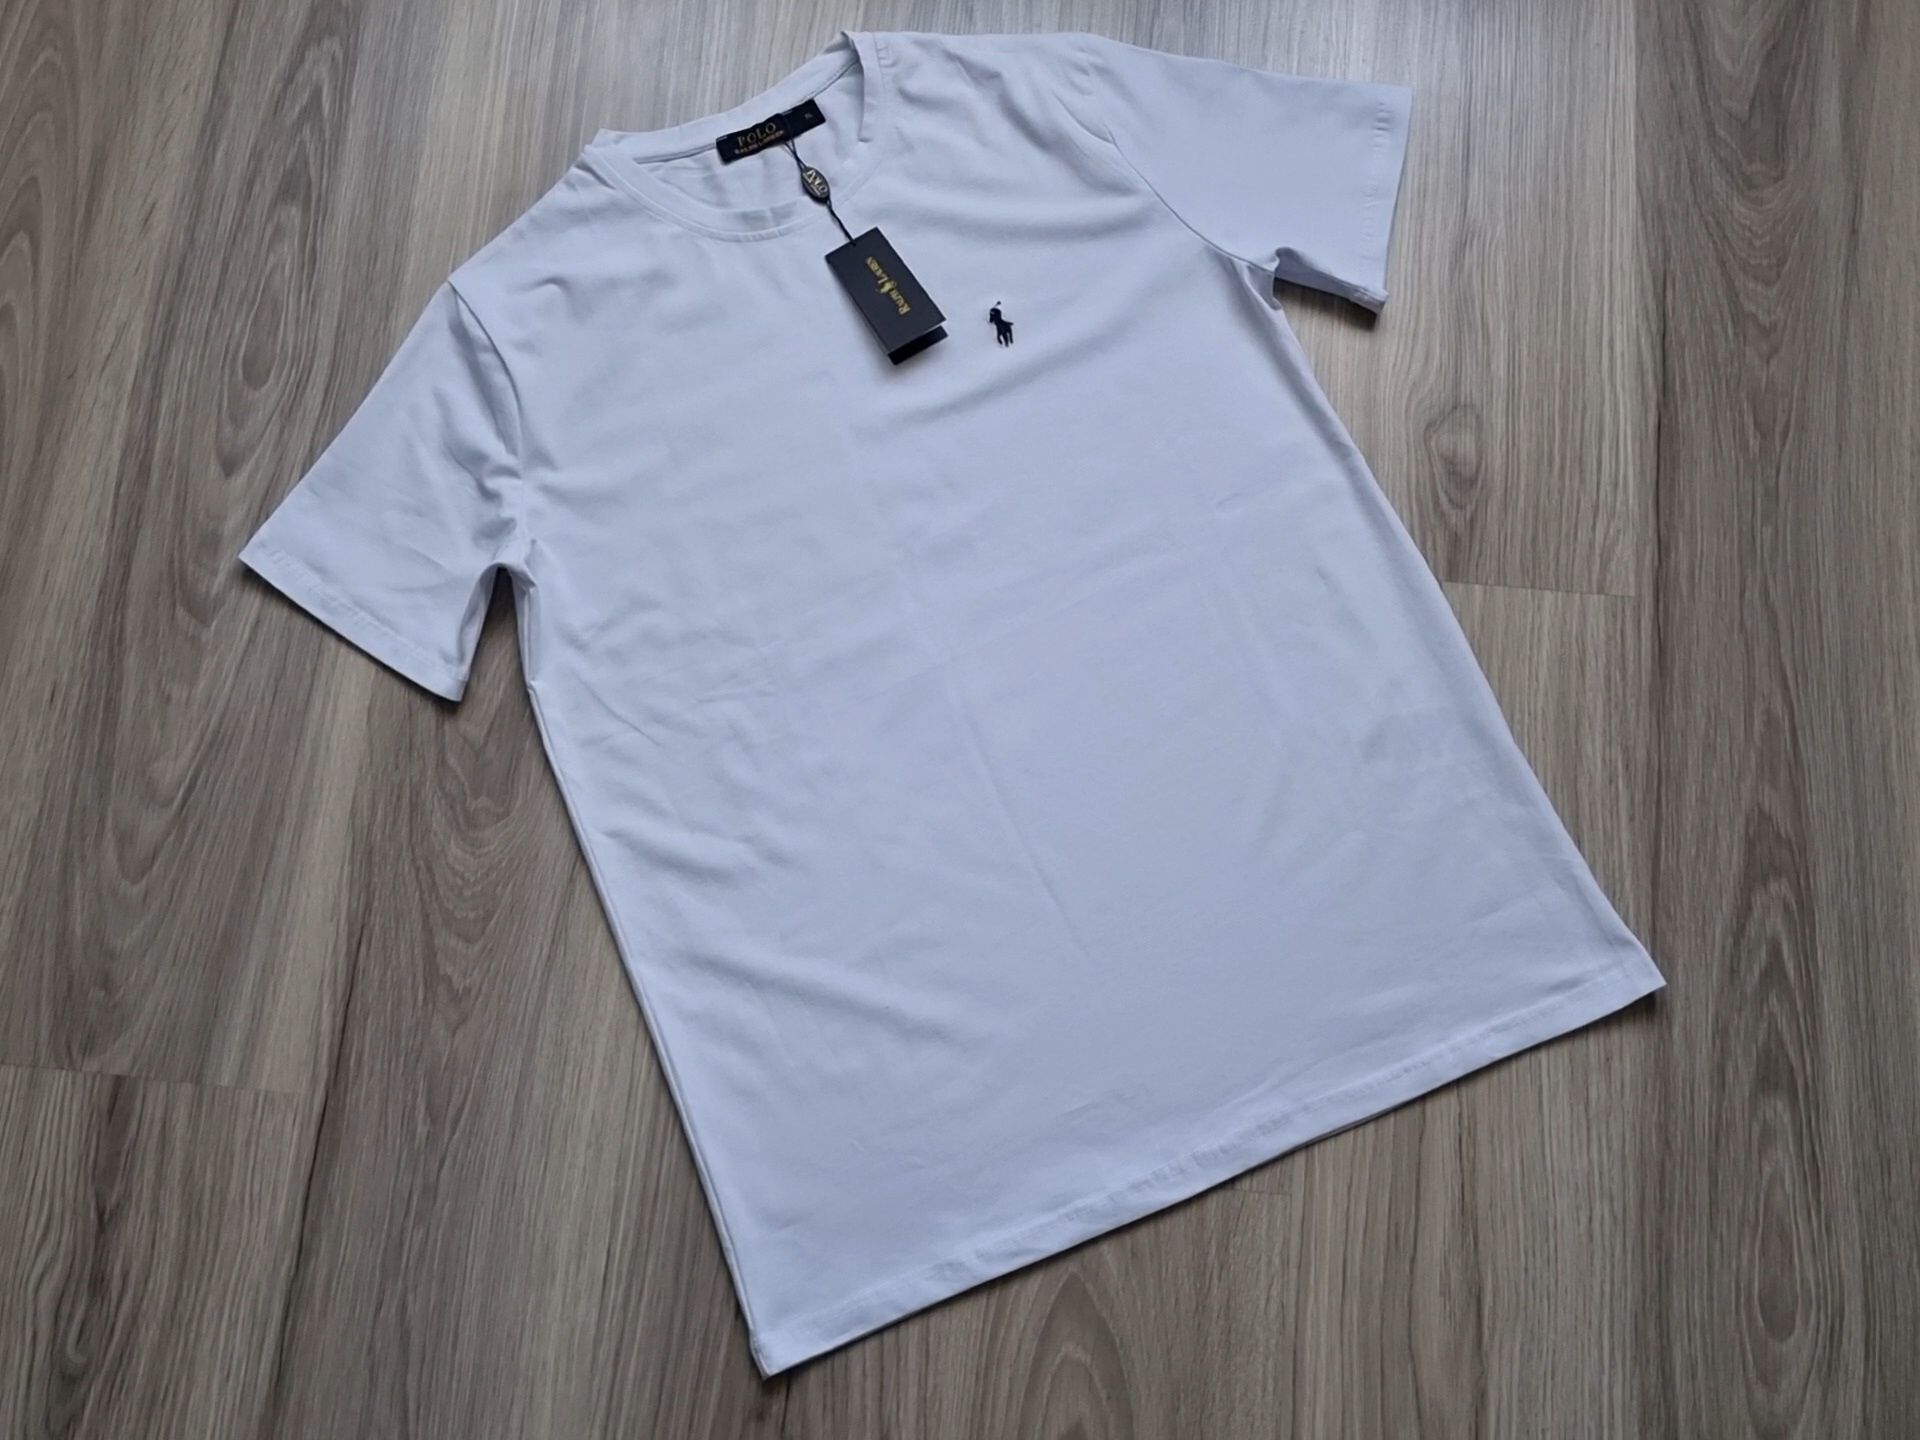 T-shirt/koszulka męska biała Ralph Lauren rozmiar XXL - Polecam!